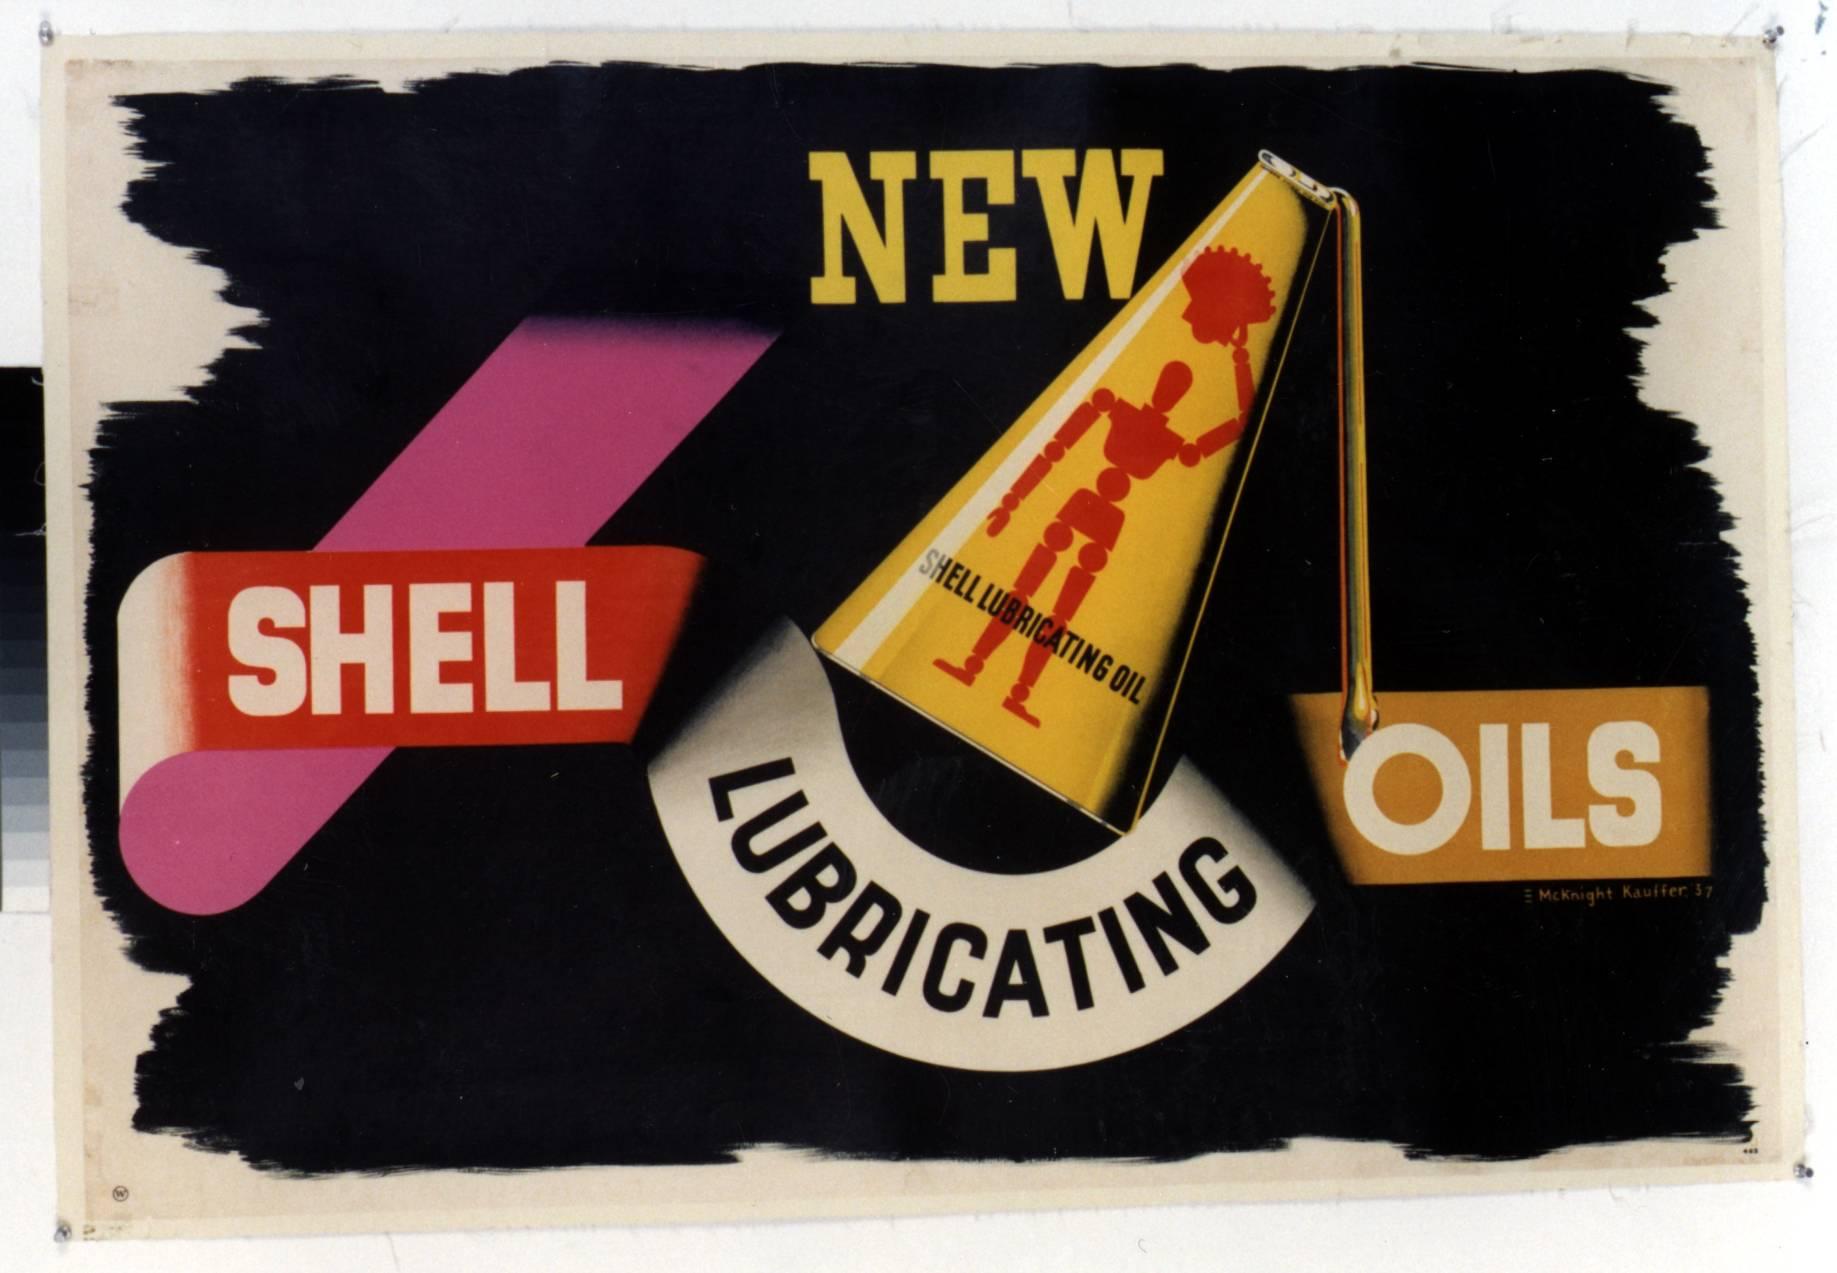 Edward McKnight Kauffer Abstract Print - NEW / SHELL LUBRICATING OILS. 